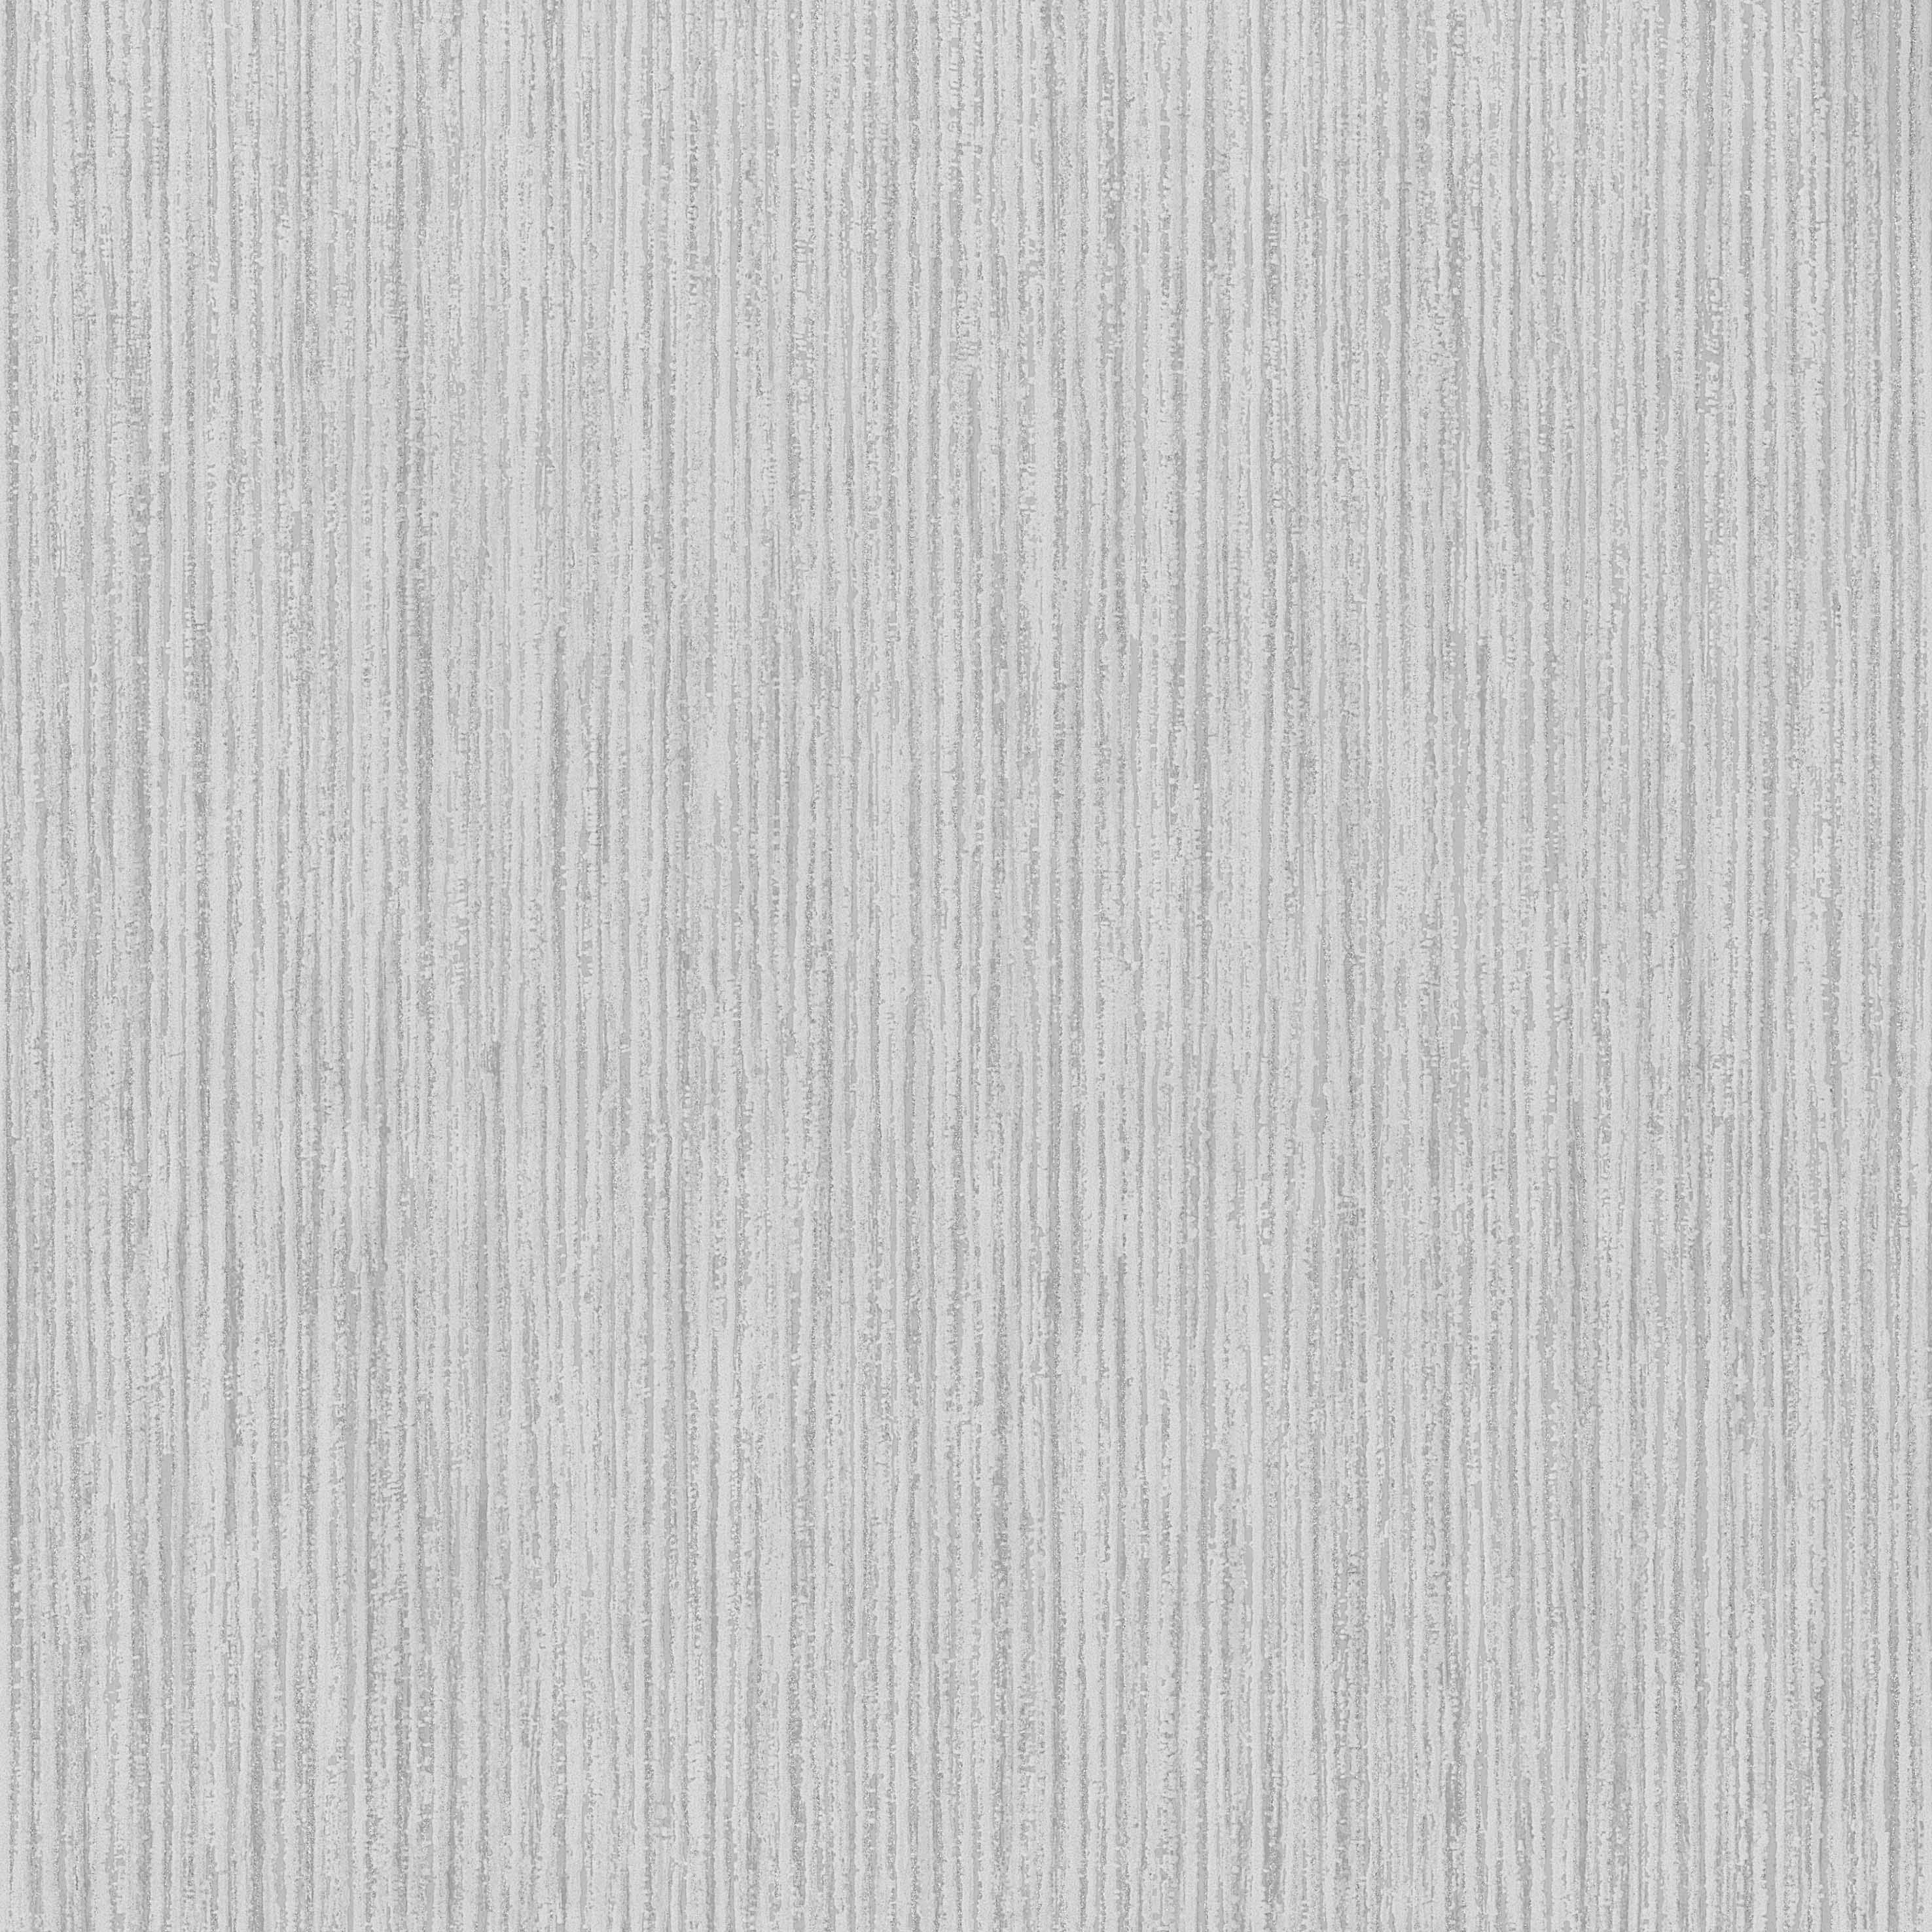 Grey Textured Wallpaper Silver Birch Texture